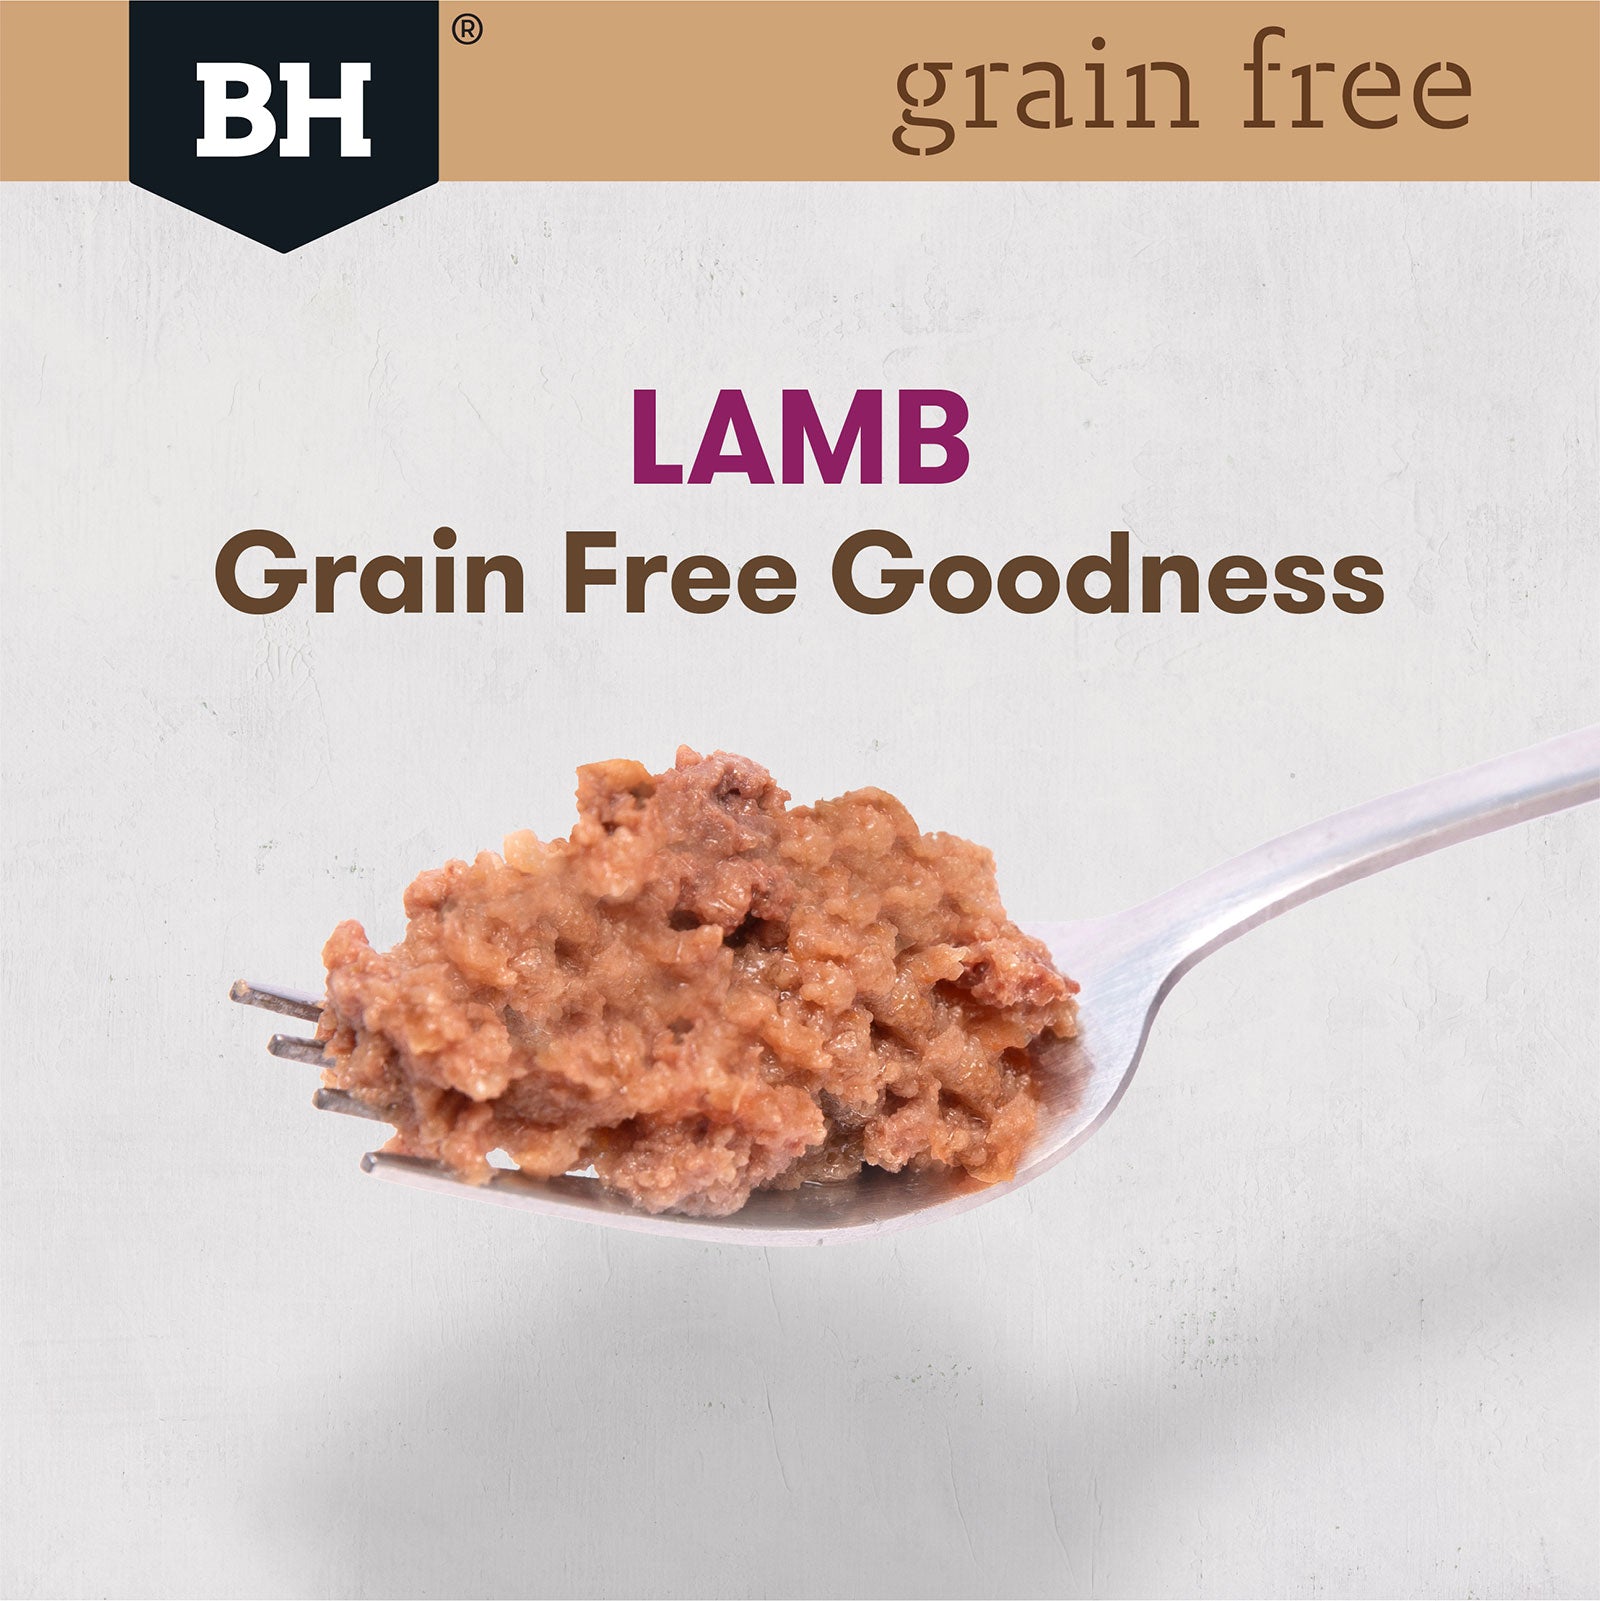 Black Hawk Grain Free Dog Food Tray Lamb